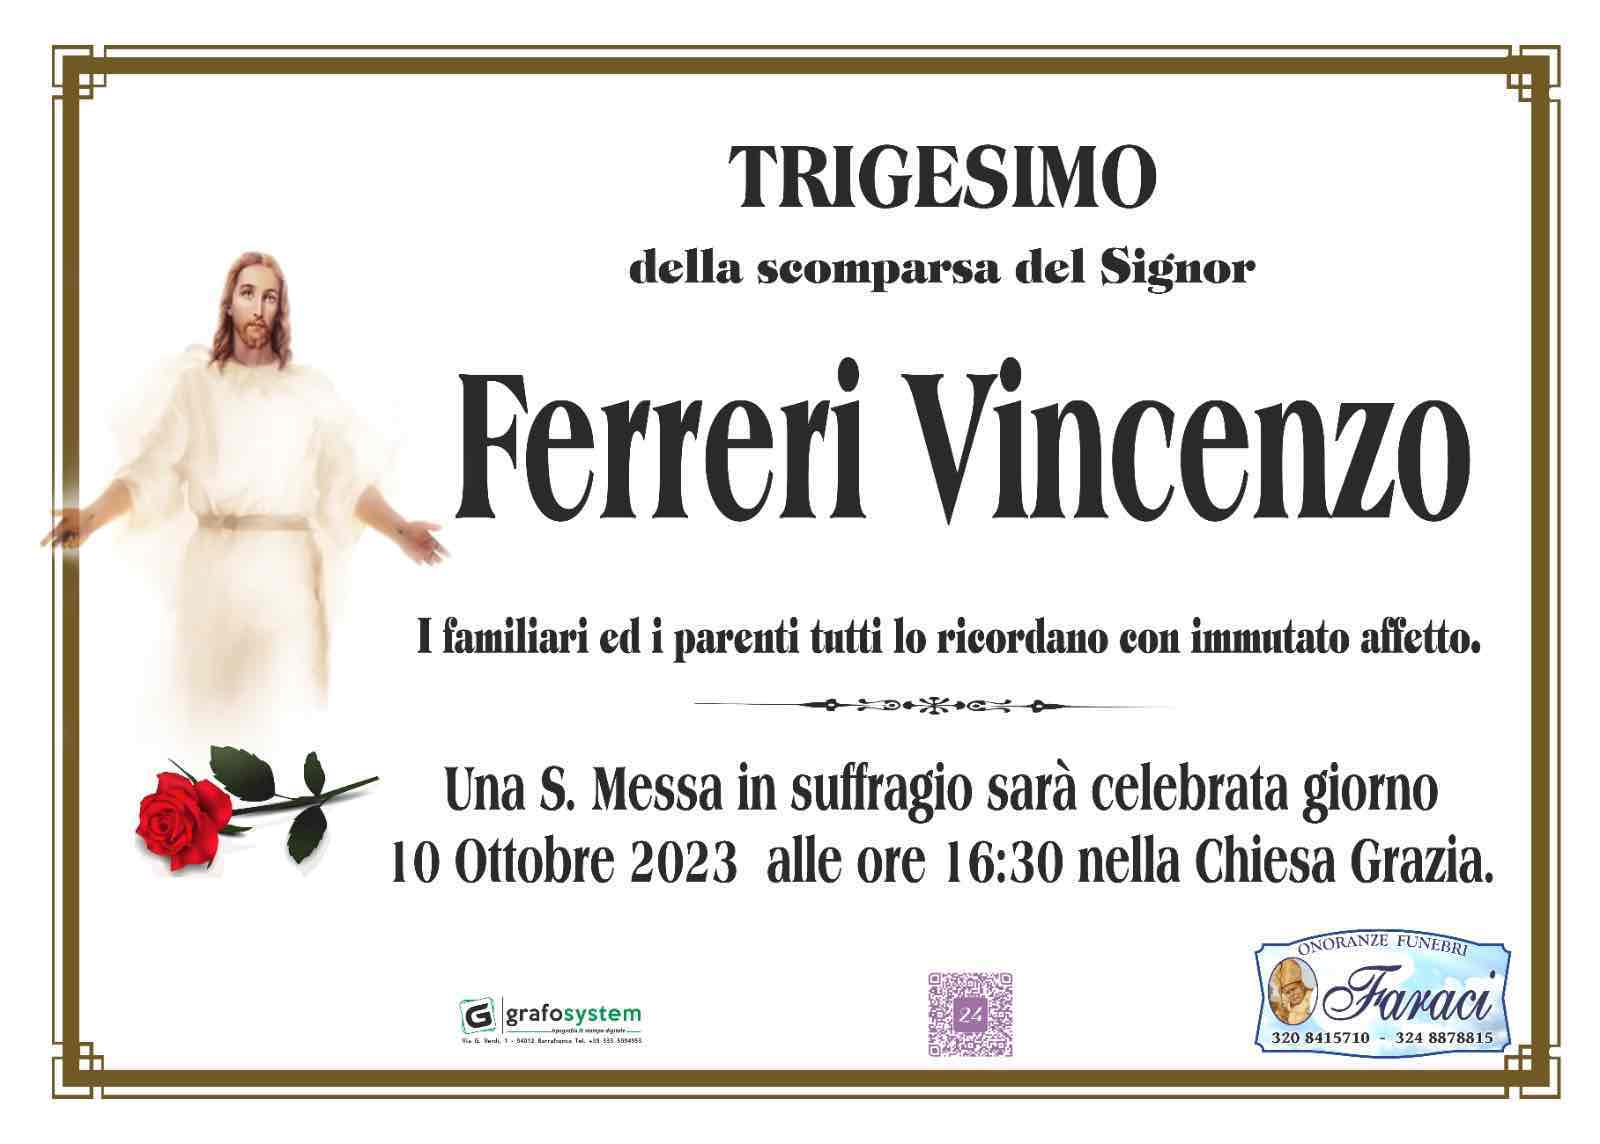 Vincenzo Ferreri